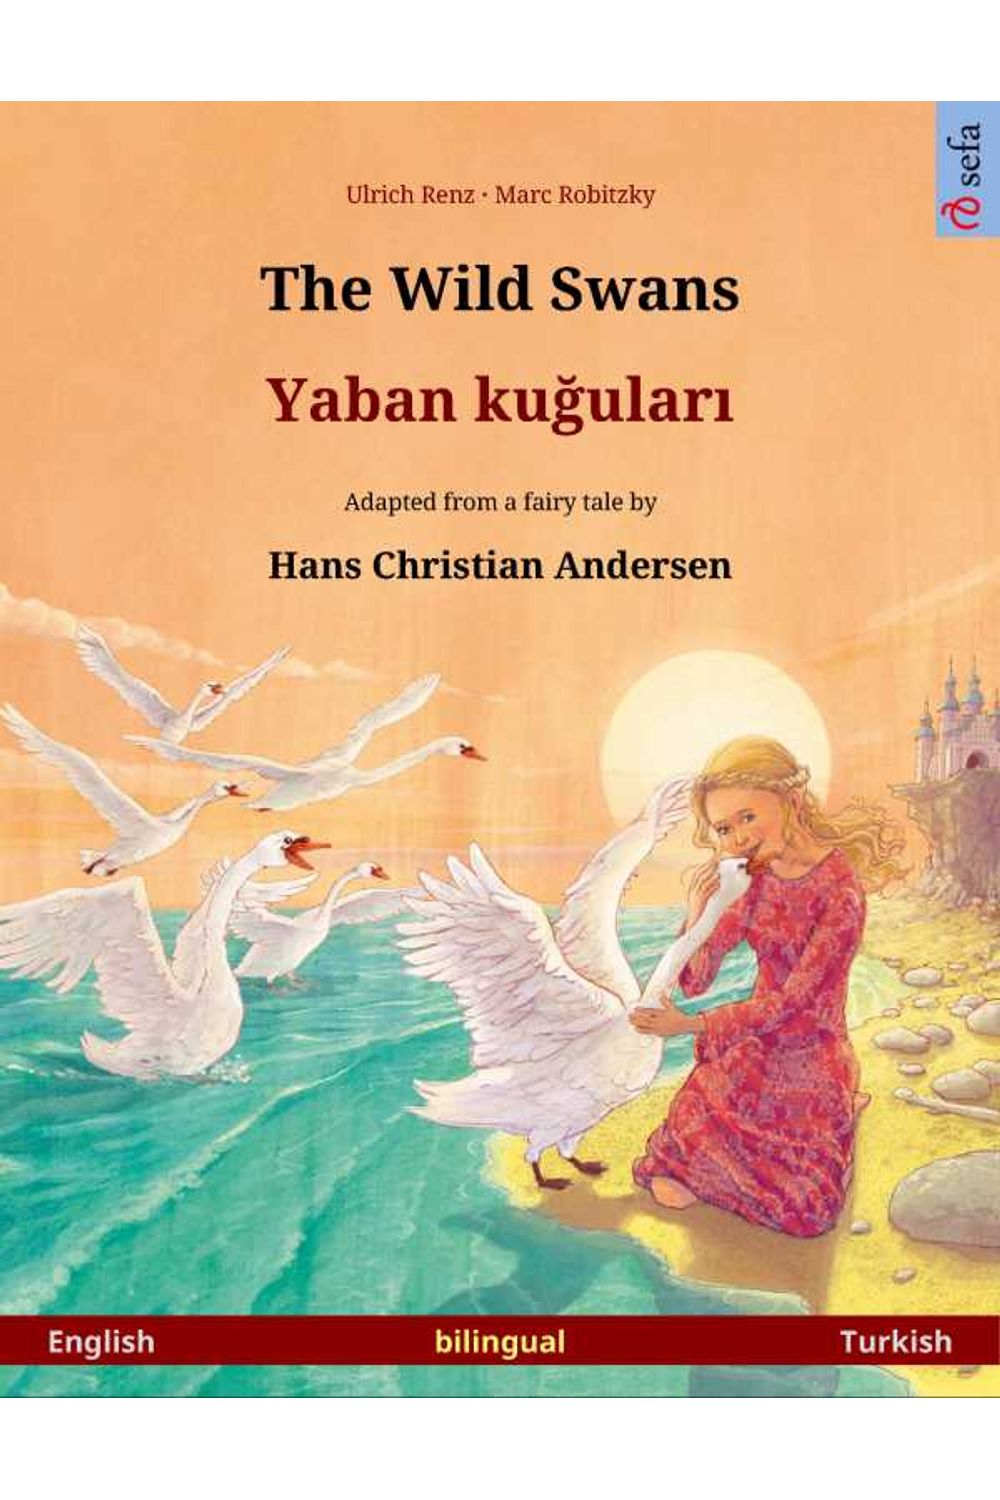 bw-the-wild-swans-ndash-yaban-kuular-bilingual-picture-book-based-on-a-fairy-tale-by-hans-christian-andersen-english-ndash-turkish-sefa-verlag-9783739953786